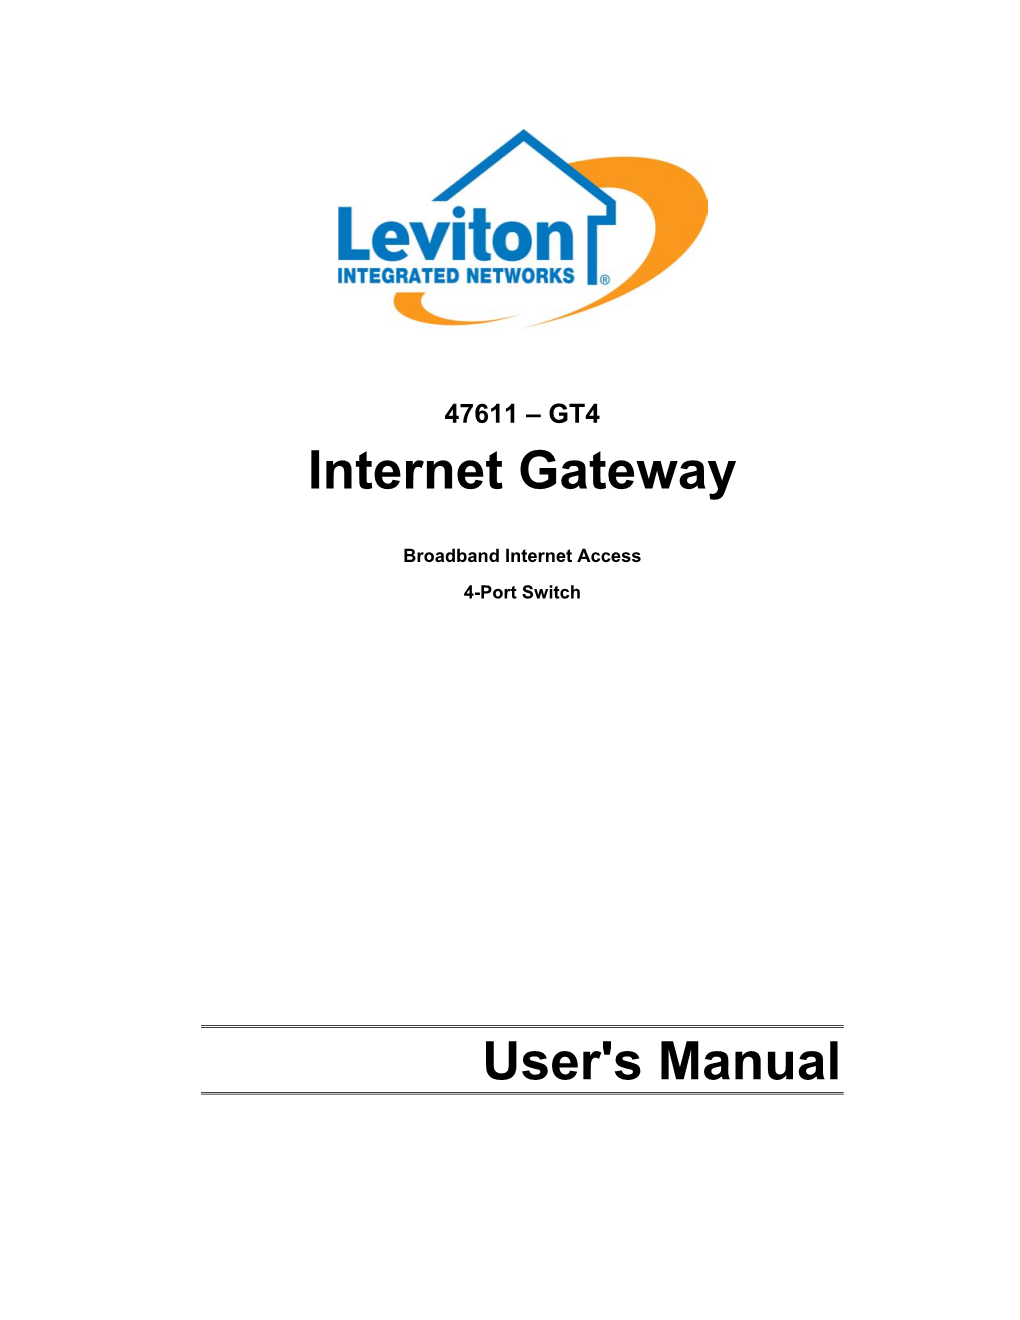 Internet Gateway User's Manual